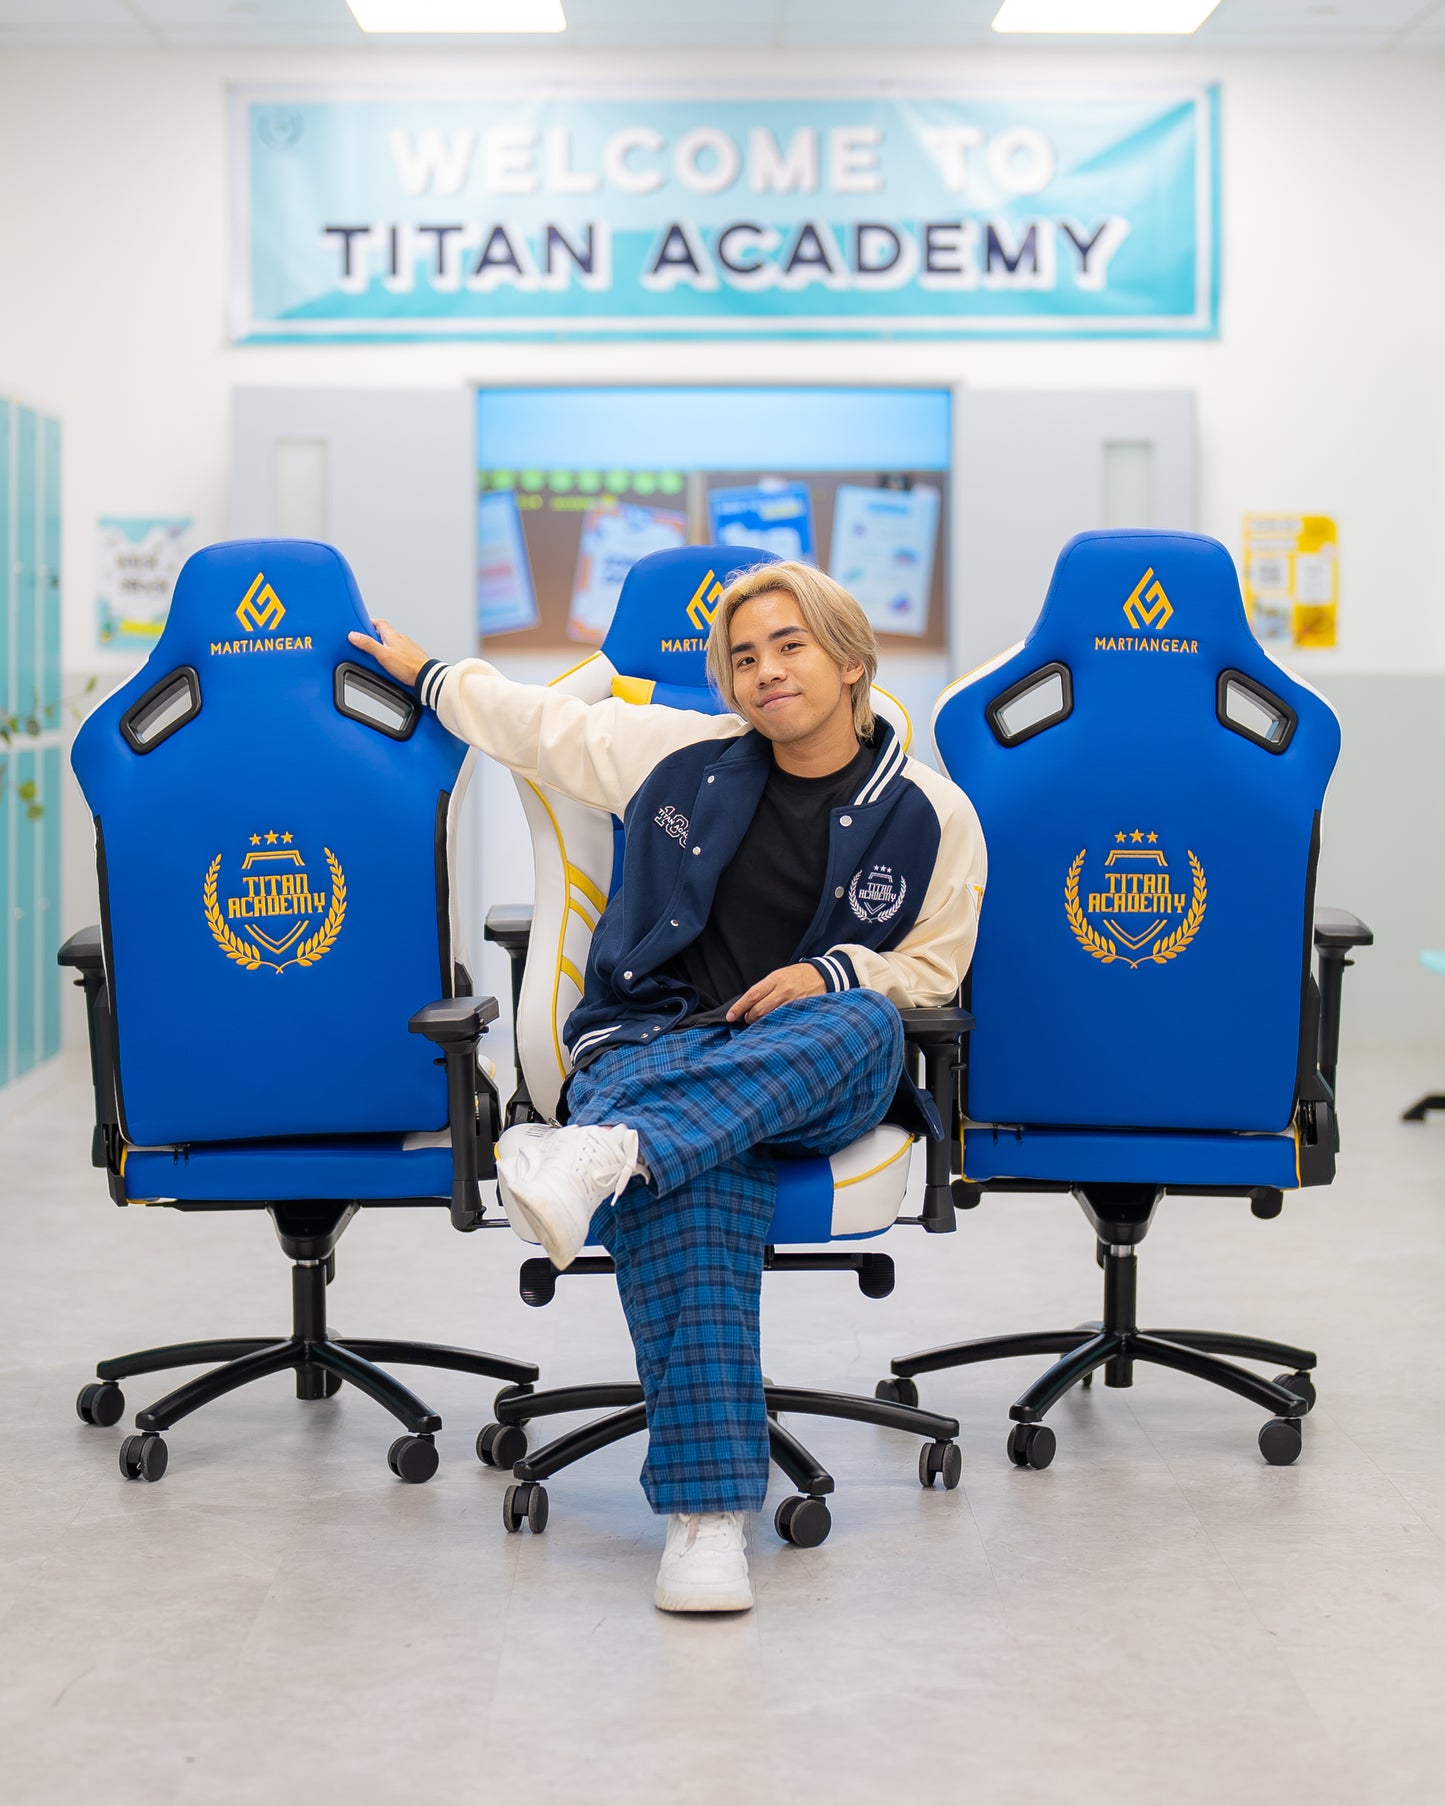 Martiangear Titan Academy Chair (Astronaut V1) LIMITED EDITION